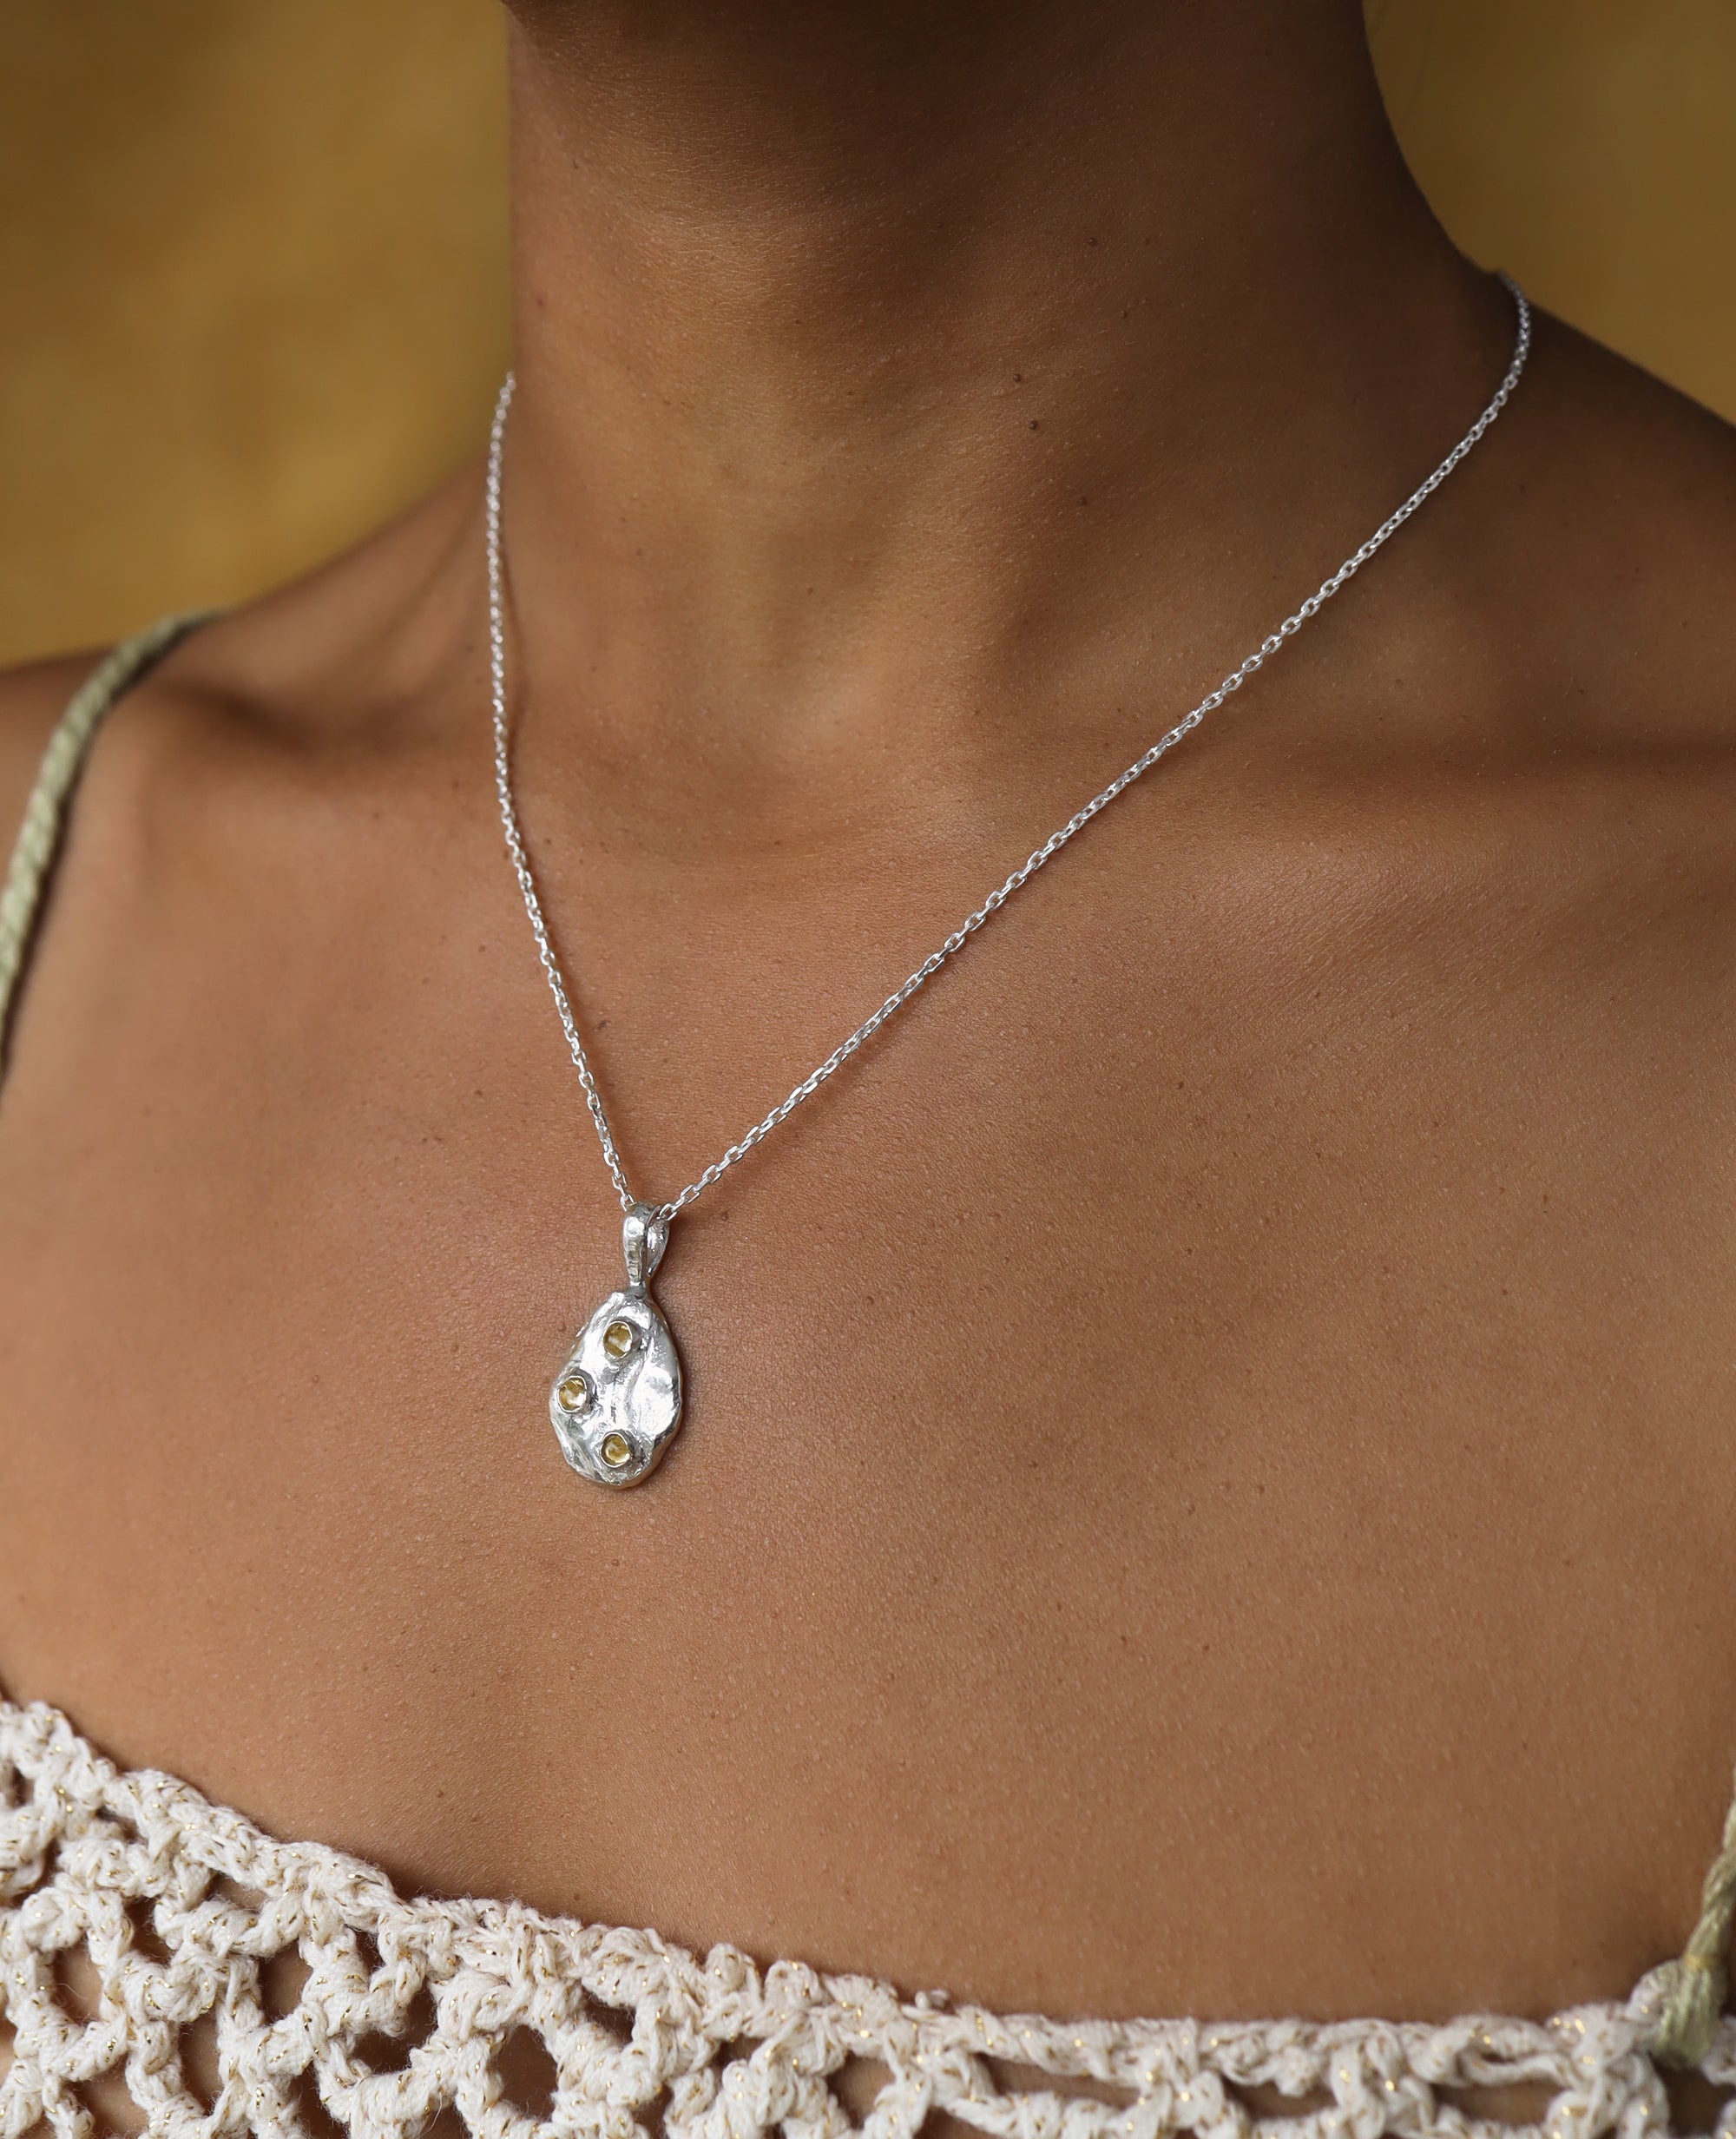 CELESTIAL SPORES // silver pendant - ORA-C jewelry - handmade jewelry by Montreal based independent designer Caroline Pham